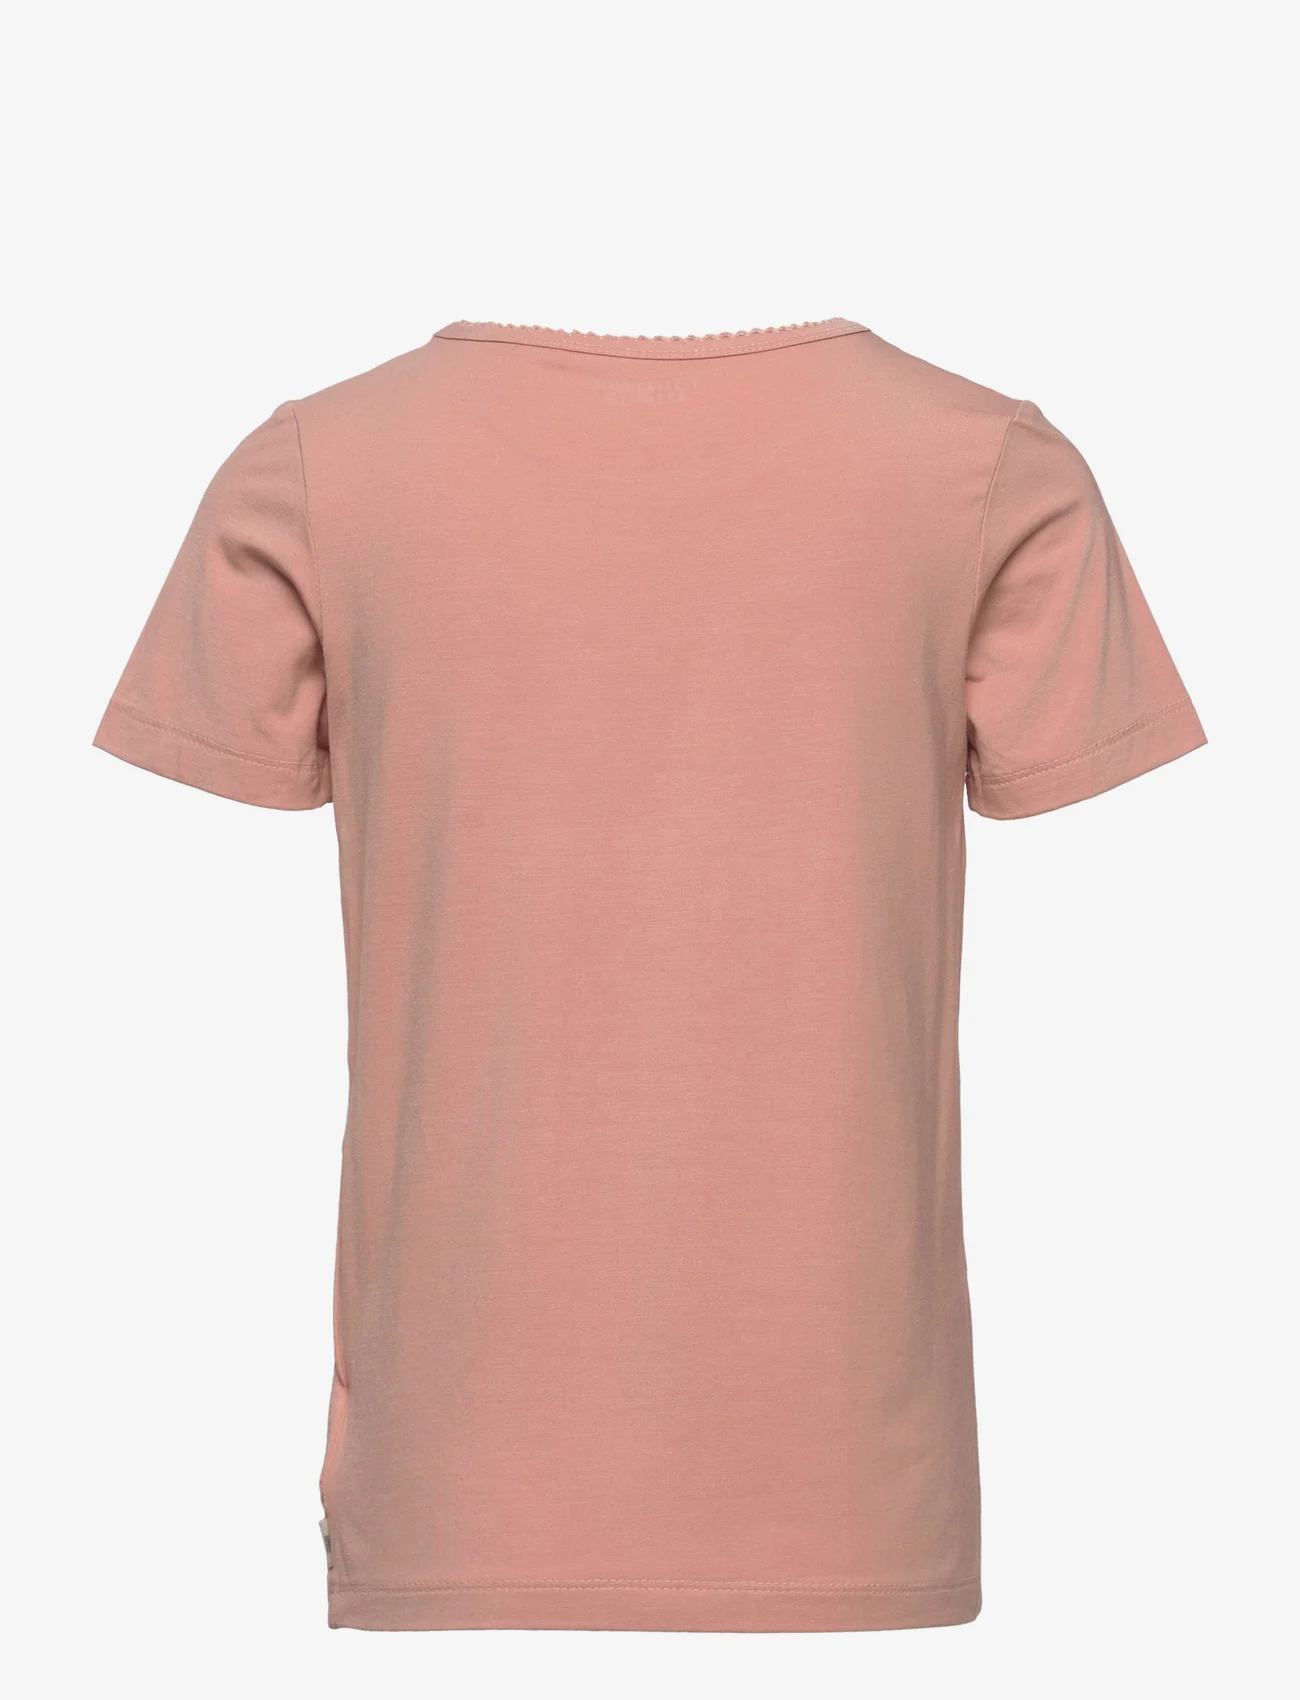 Minymo - Blouse SS - Bamboo - short-sleeved t-shirts - misty rose - 1